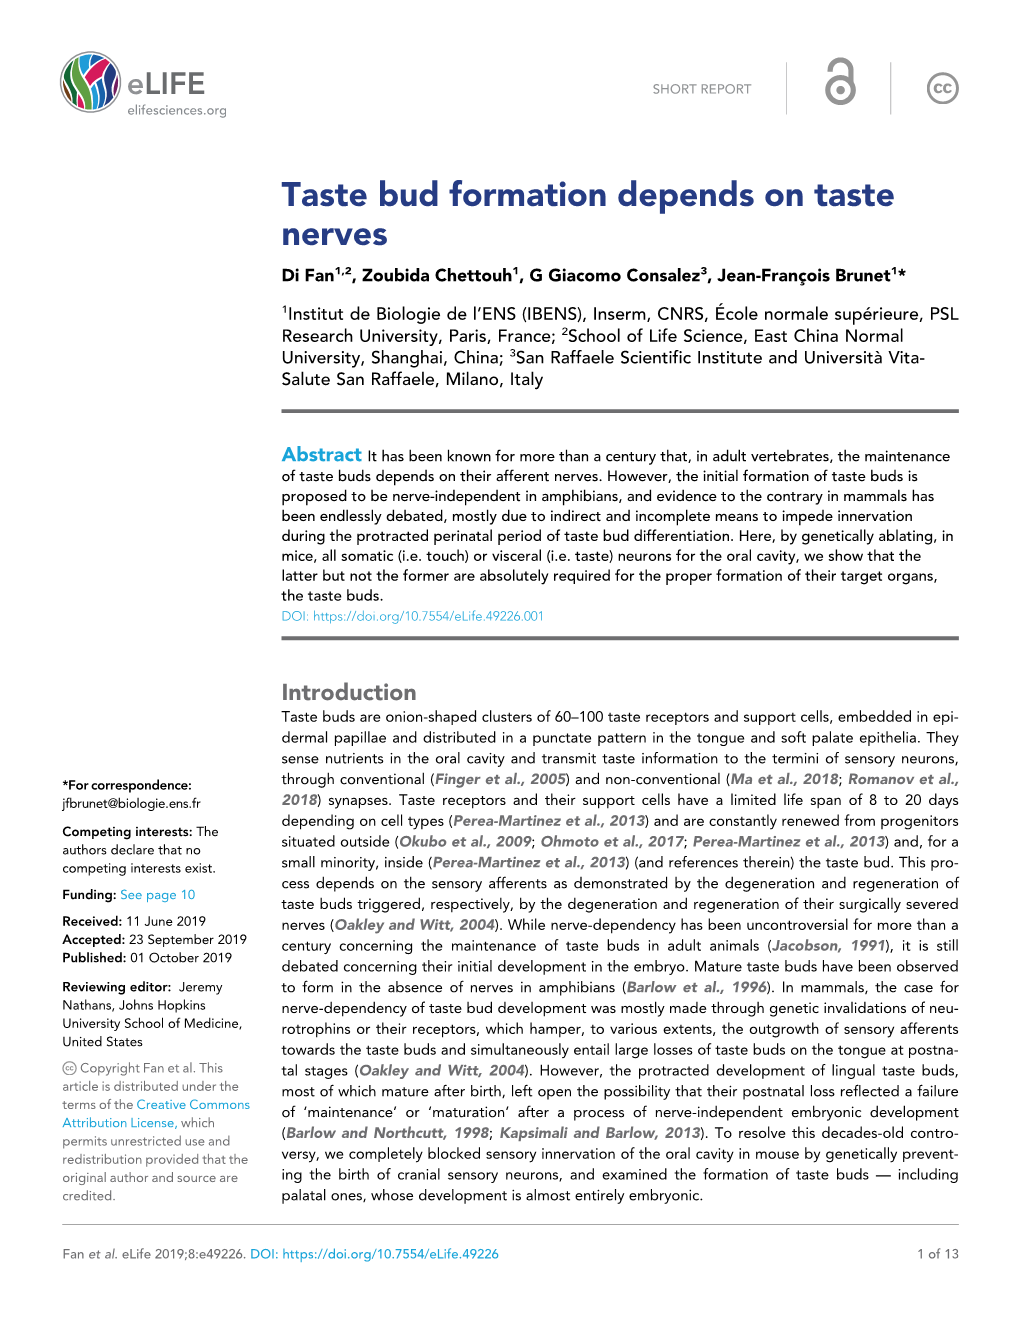 Taste Bud Formation Depends on Taste Nerves Di Fan1,2, Zoubida Chettouh1, G Giacomo Consalez3, Jean-Franc¸Ois Brunet1*